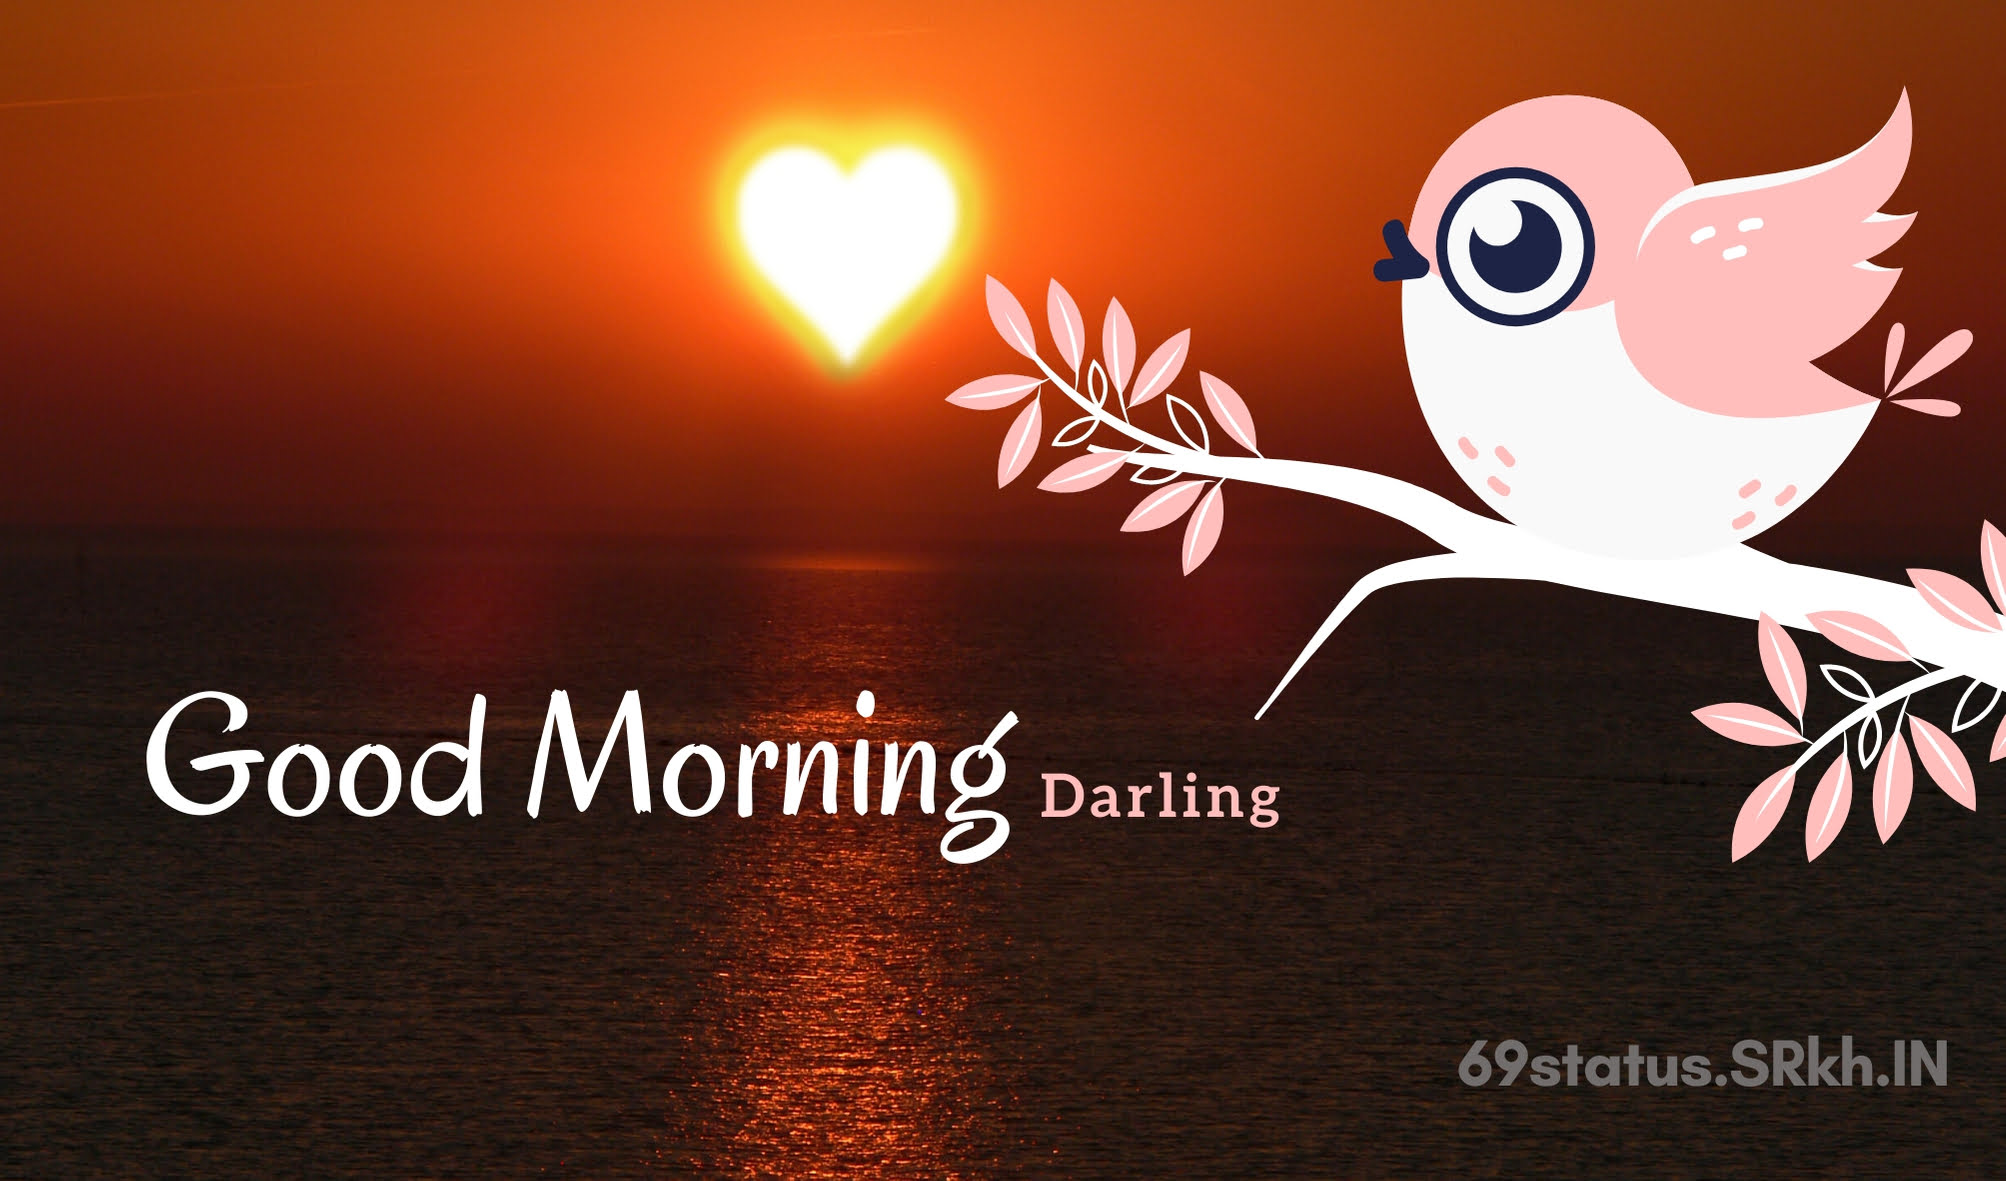 Good Morning Darling Romantic Image